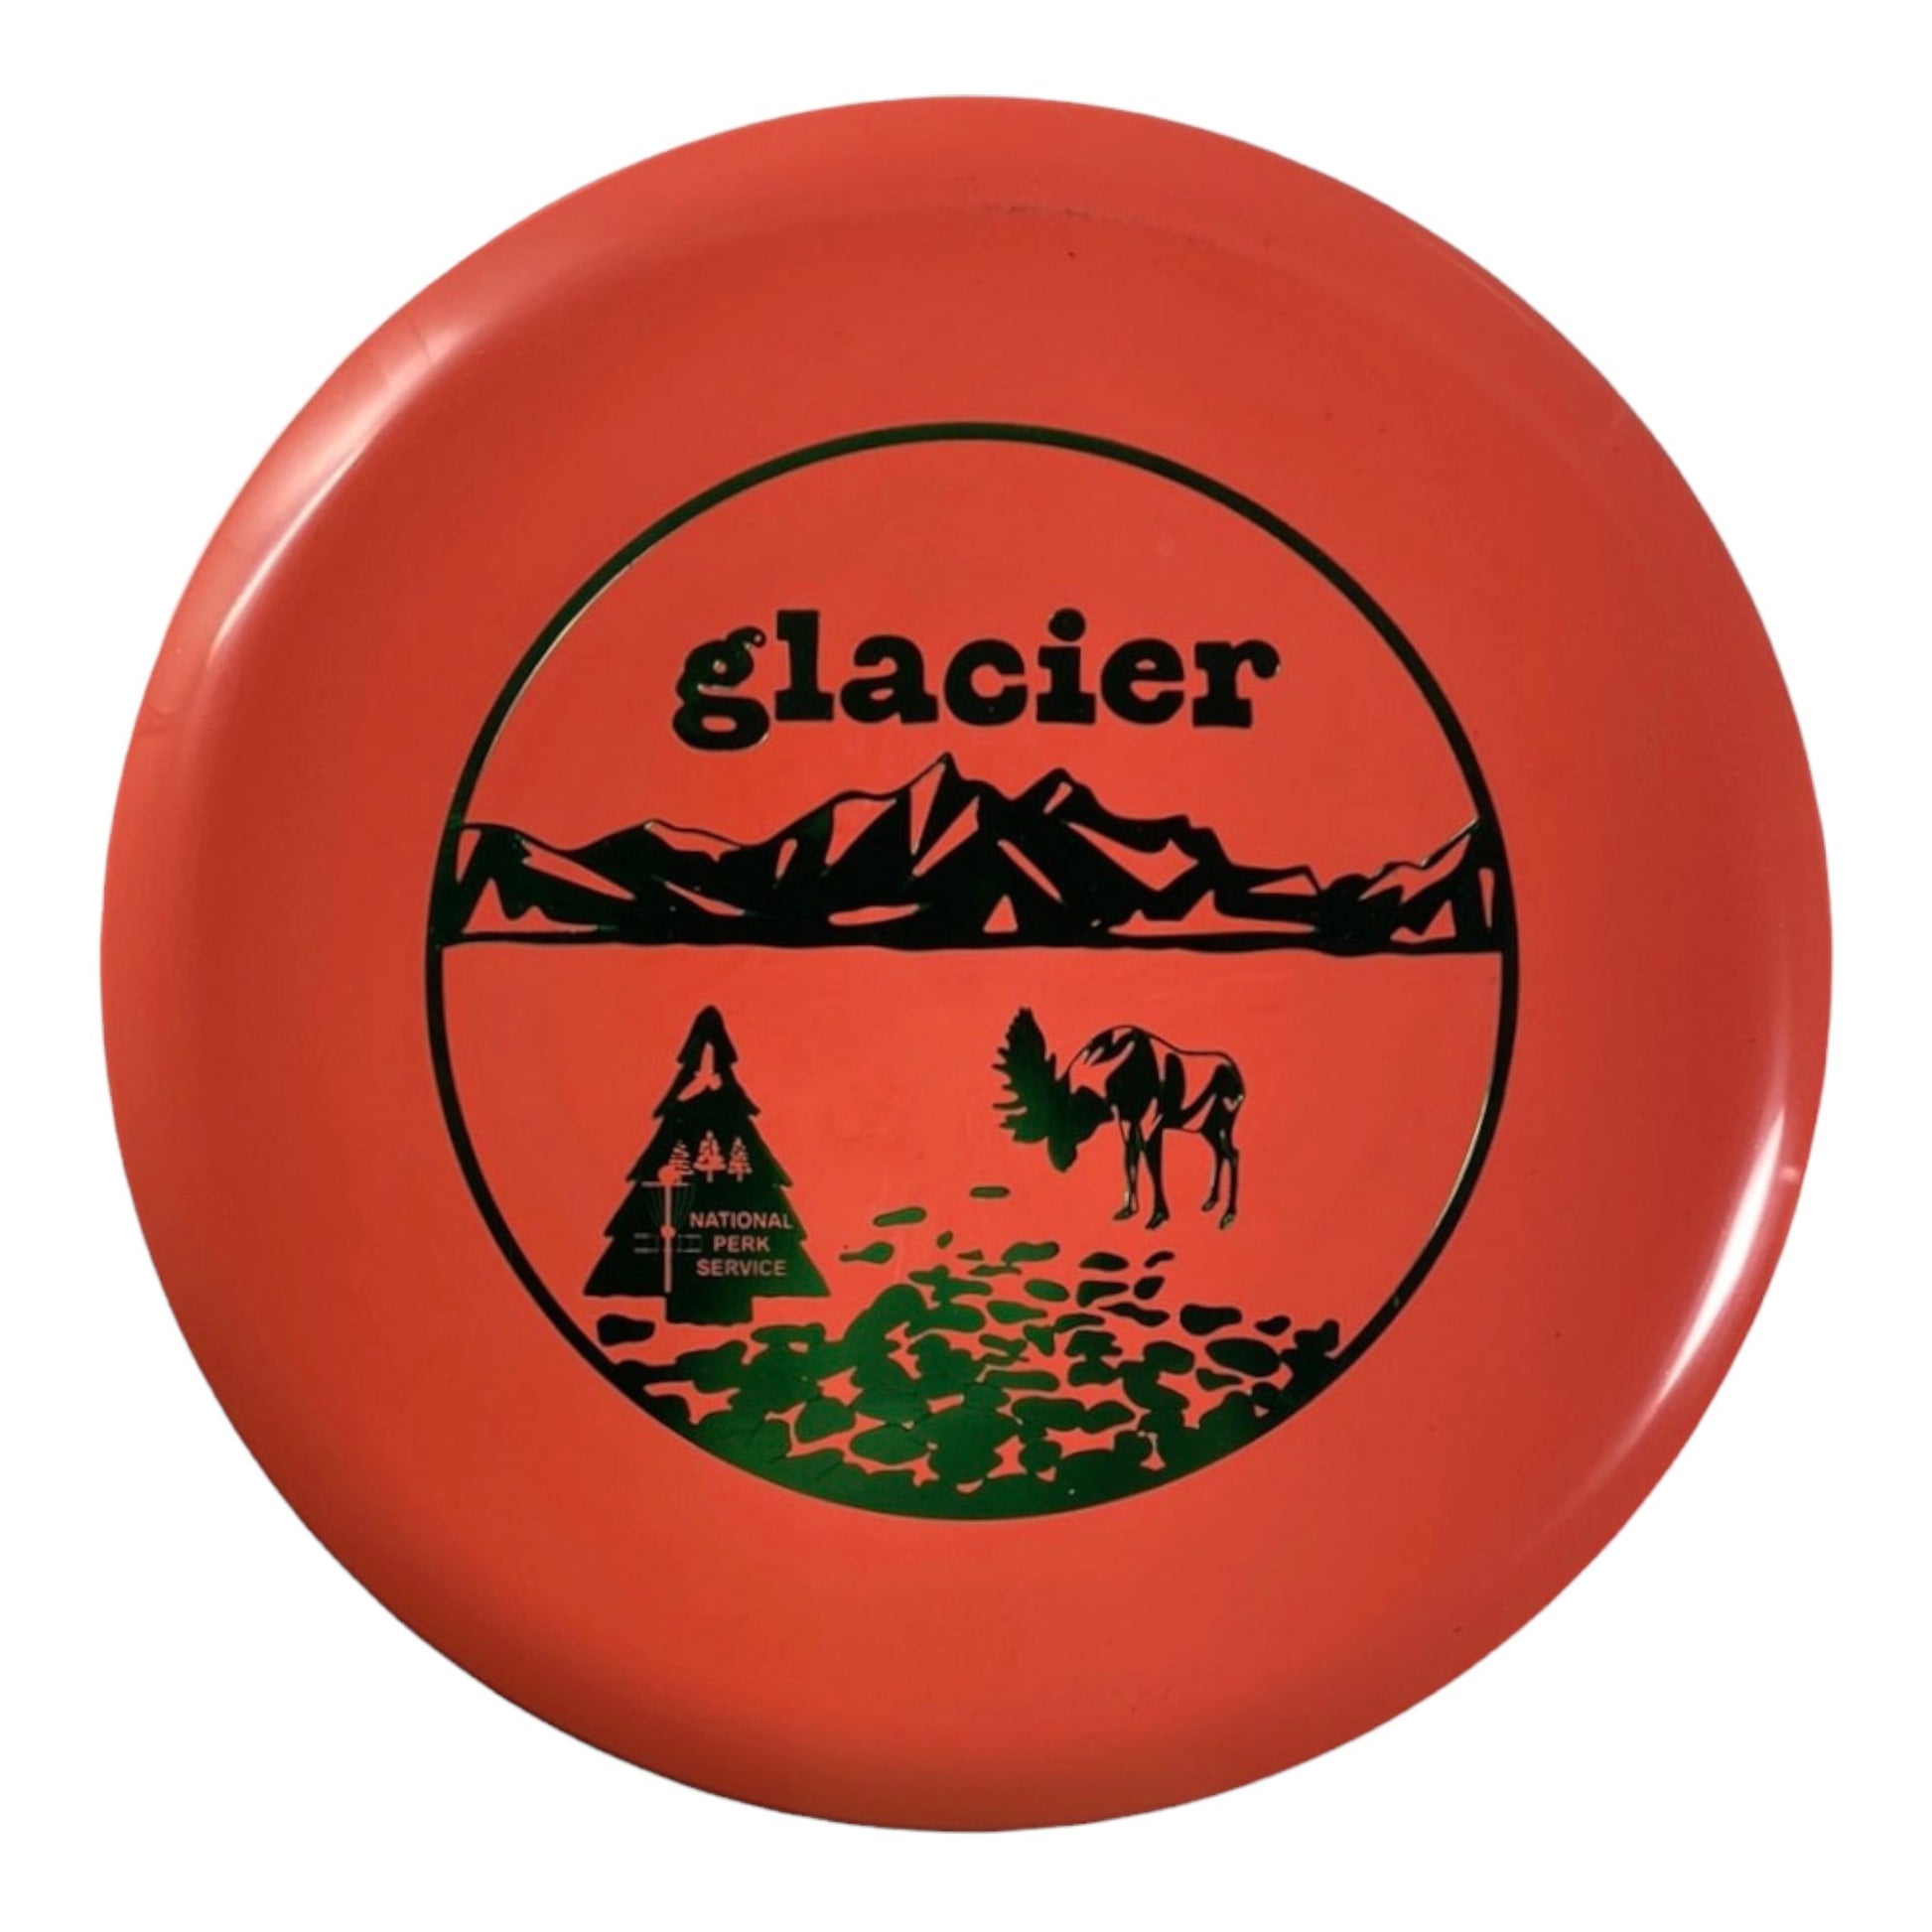 Innova Champion Discs Glacier - Roc3 | Star | Orange/Green 167g (First Run) 25/50 Disc Golf